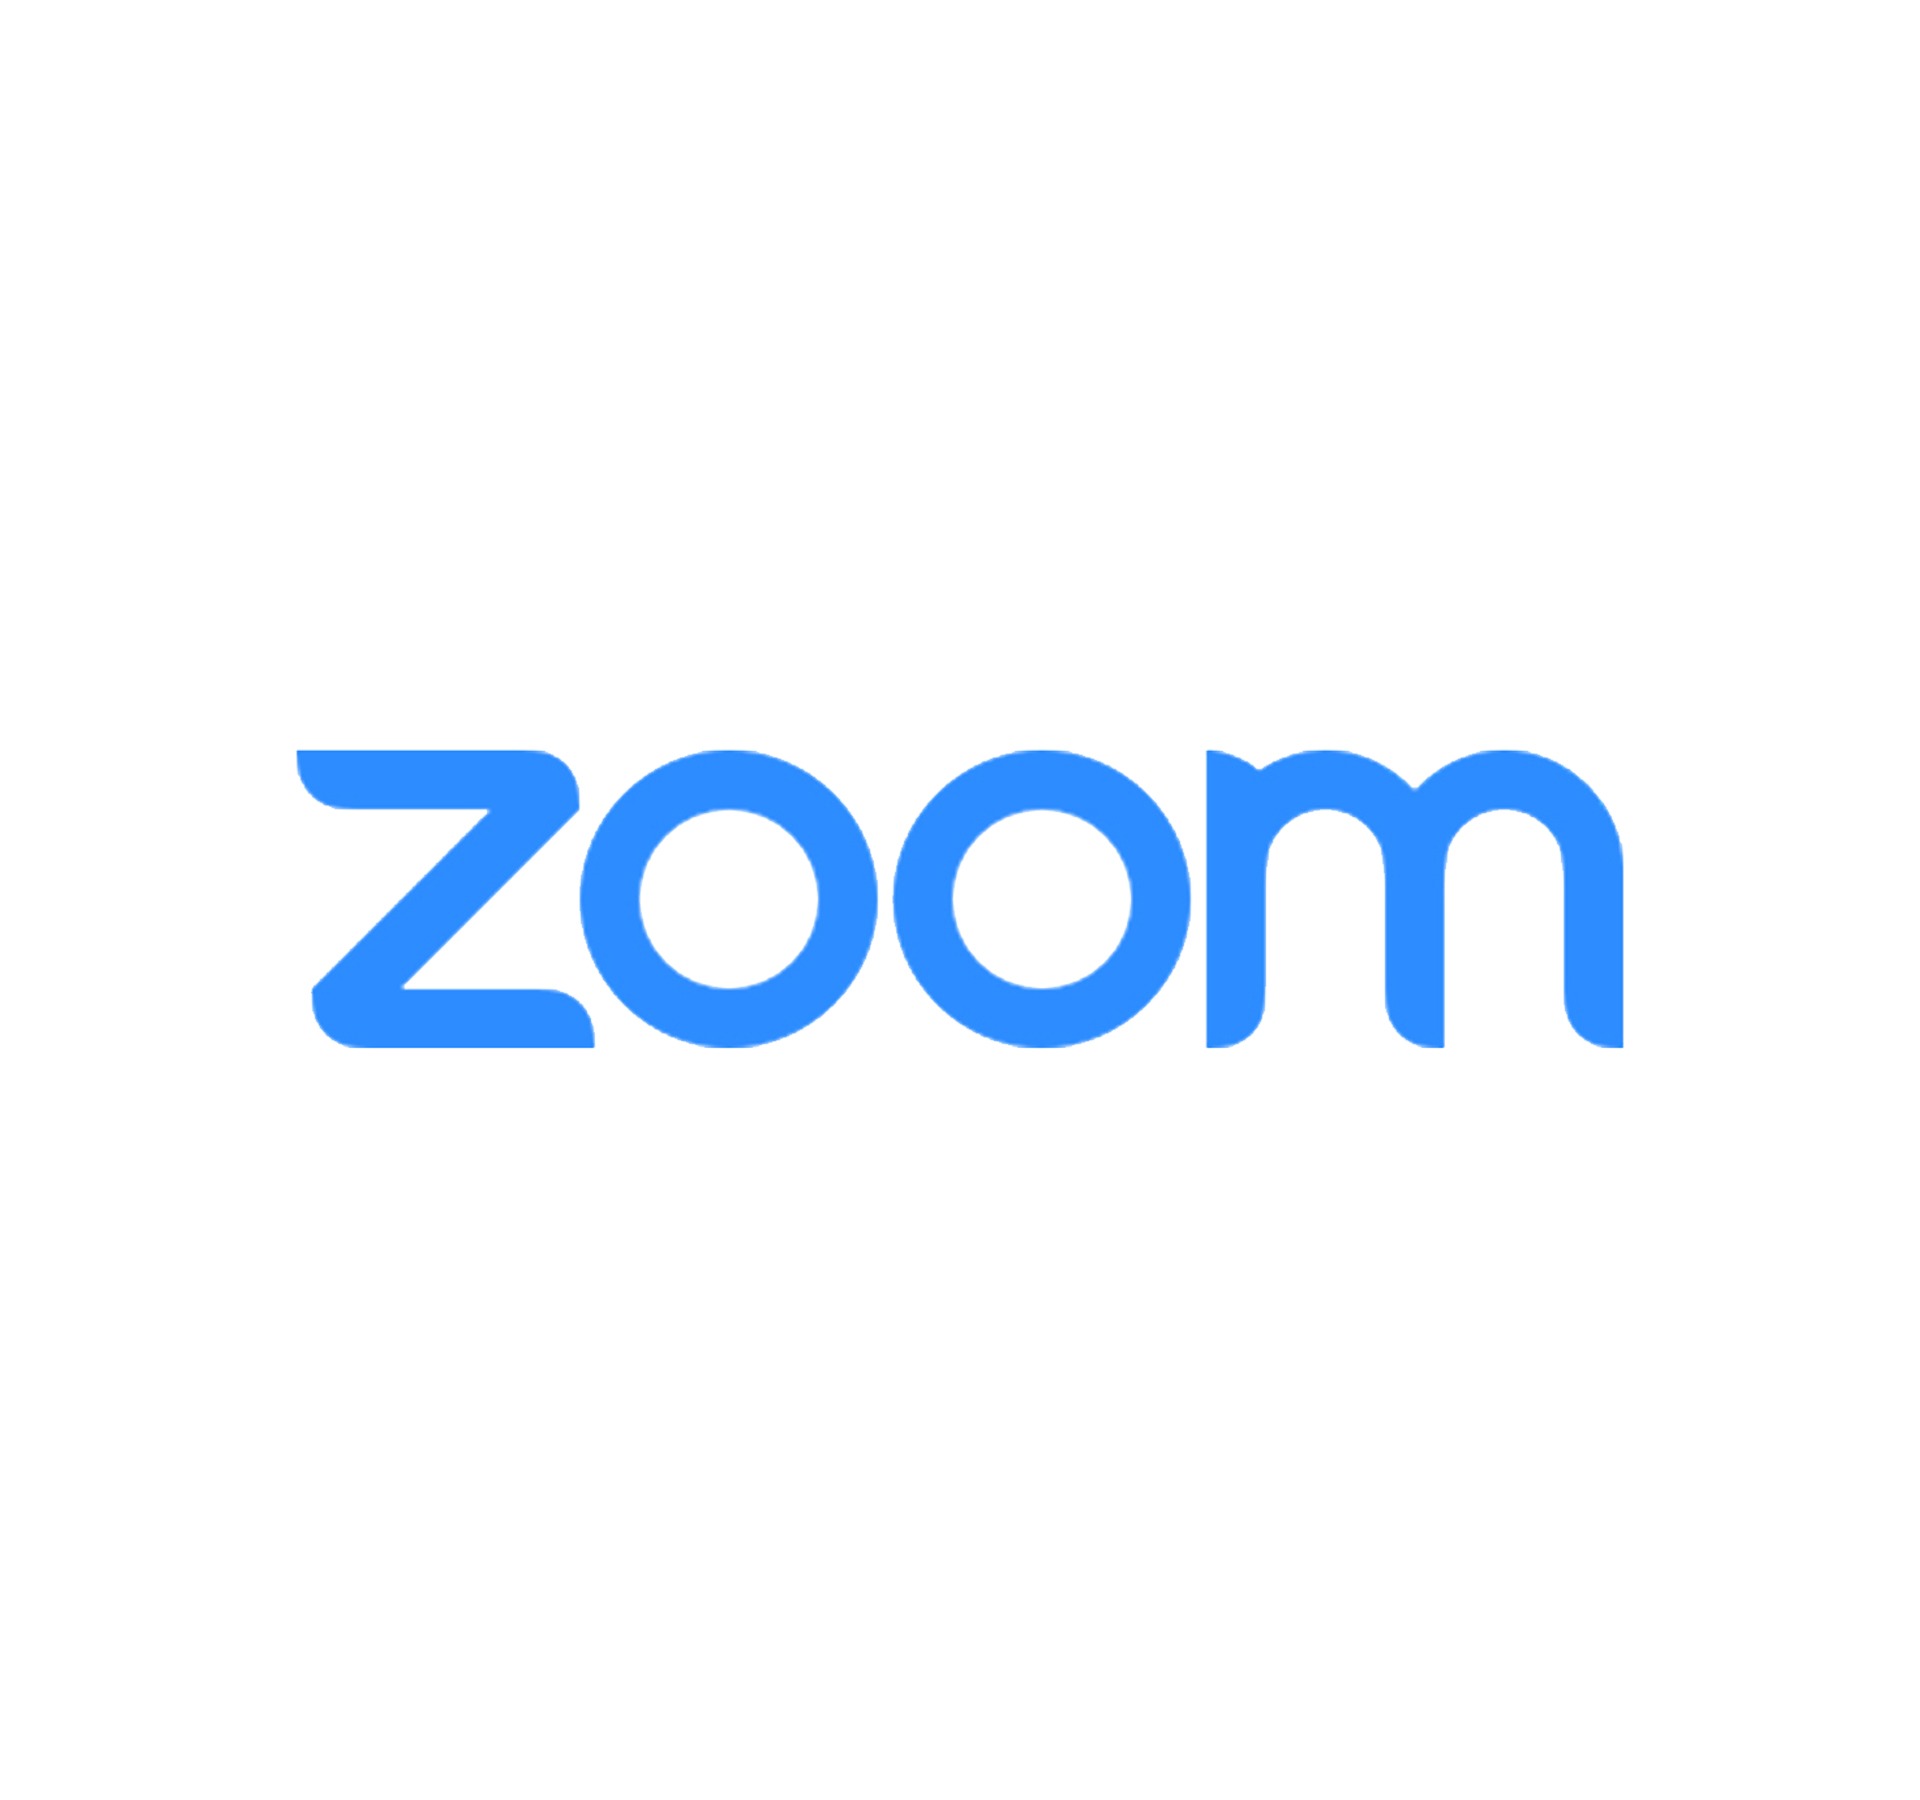 zoom resized logo.jpg 9d1f00db9a